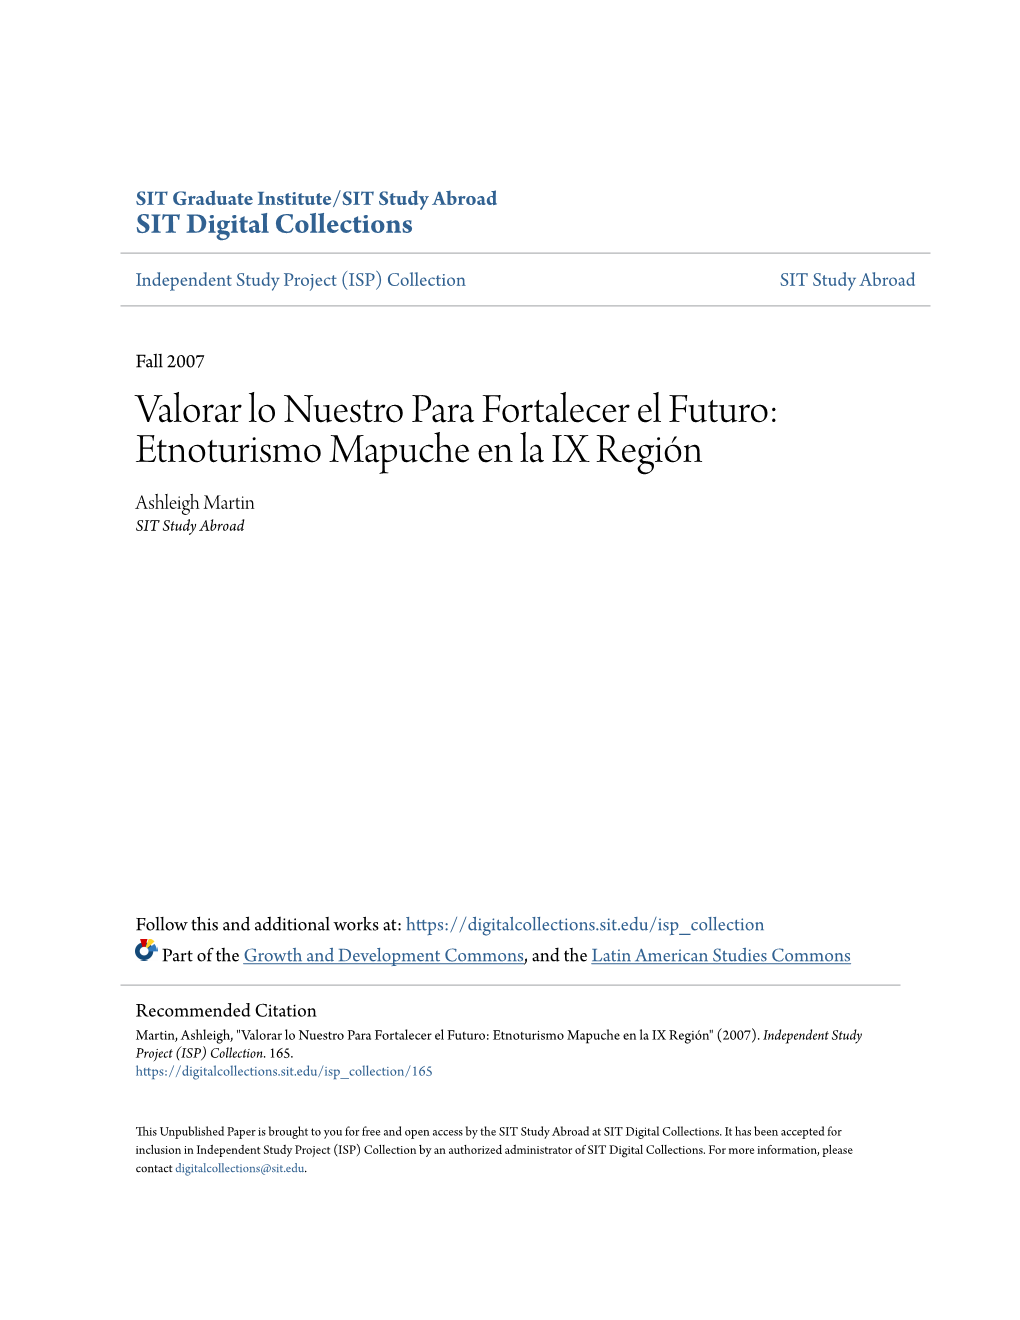 Etnoturismo Mapuche En La IX Región Ashleigh Martin SIT Study Abroad